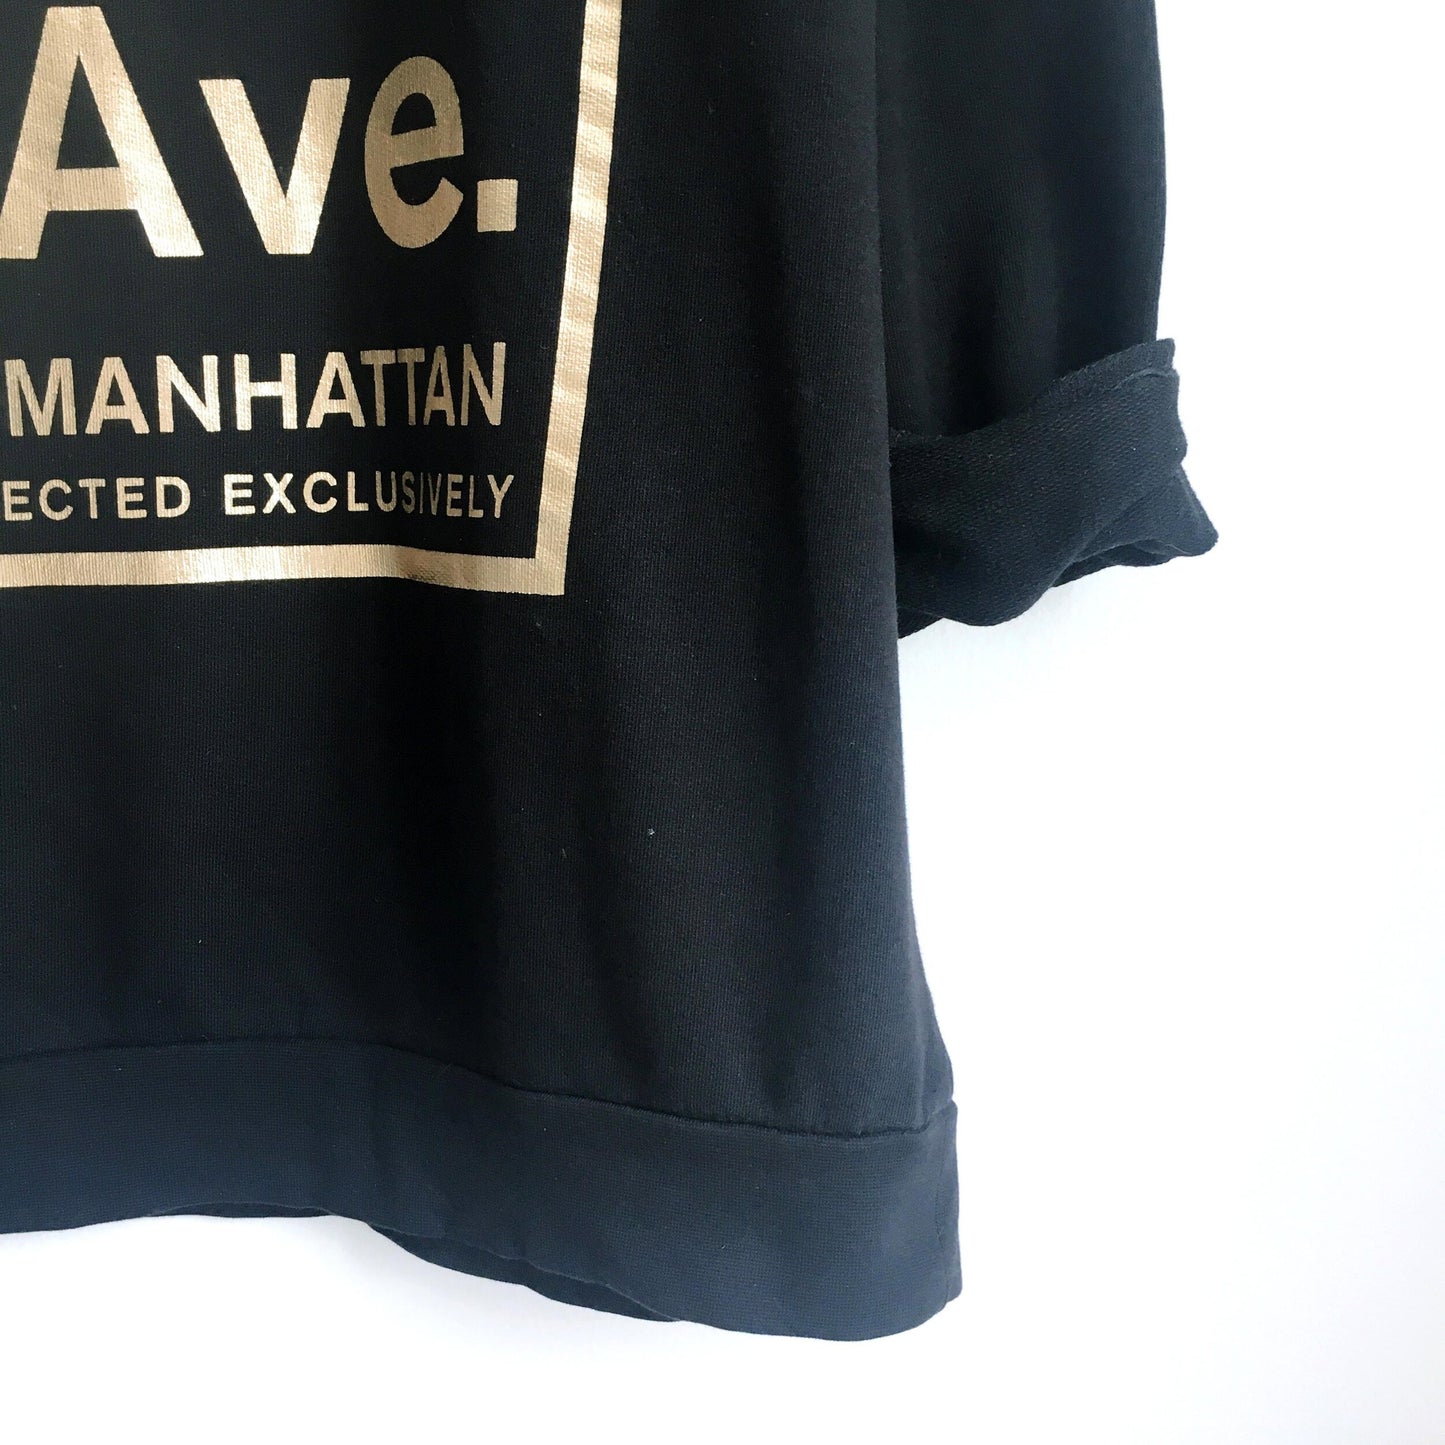 Vero Moda NYC 5th Ave Sweatshirt - size Medium